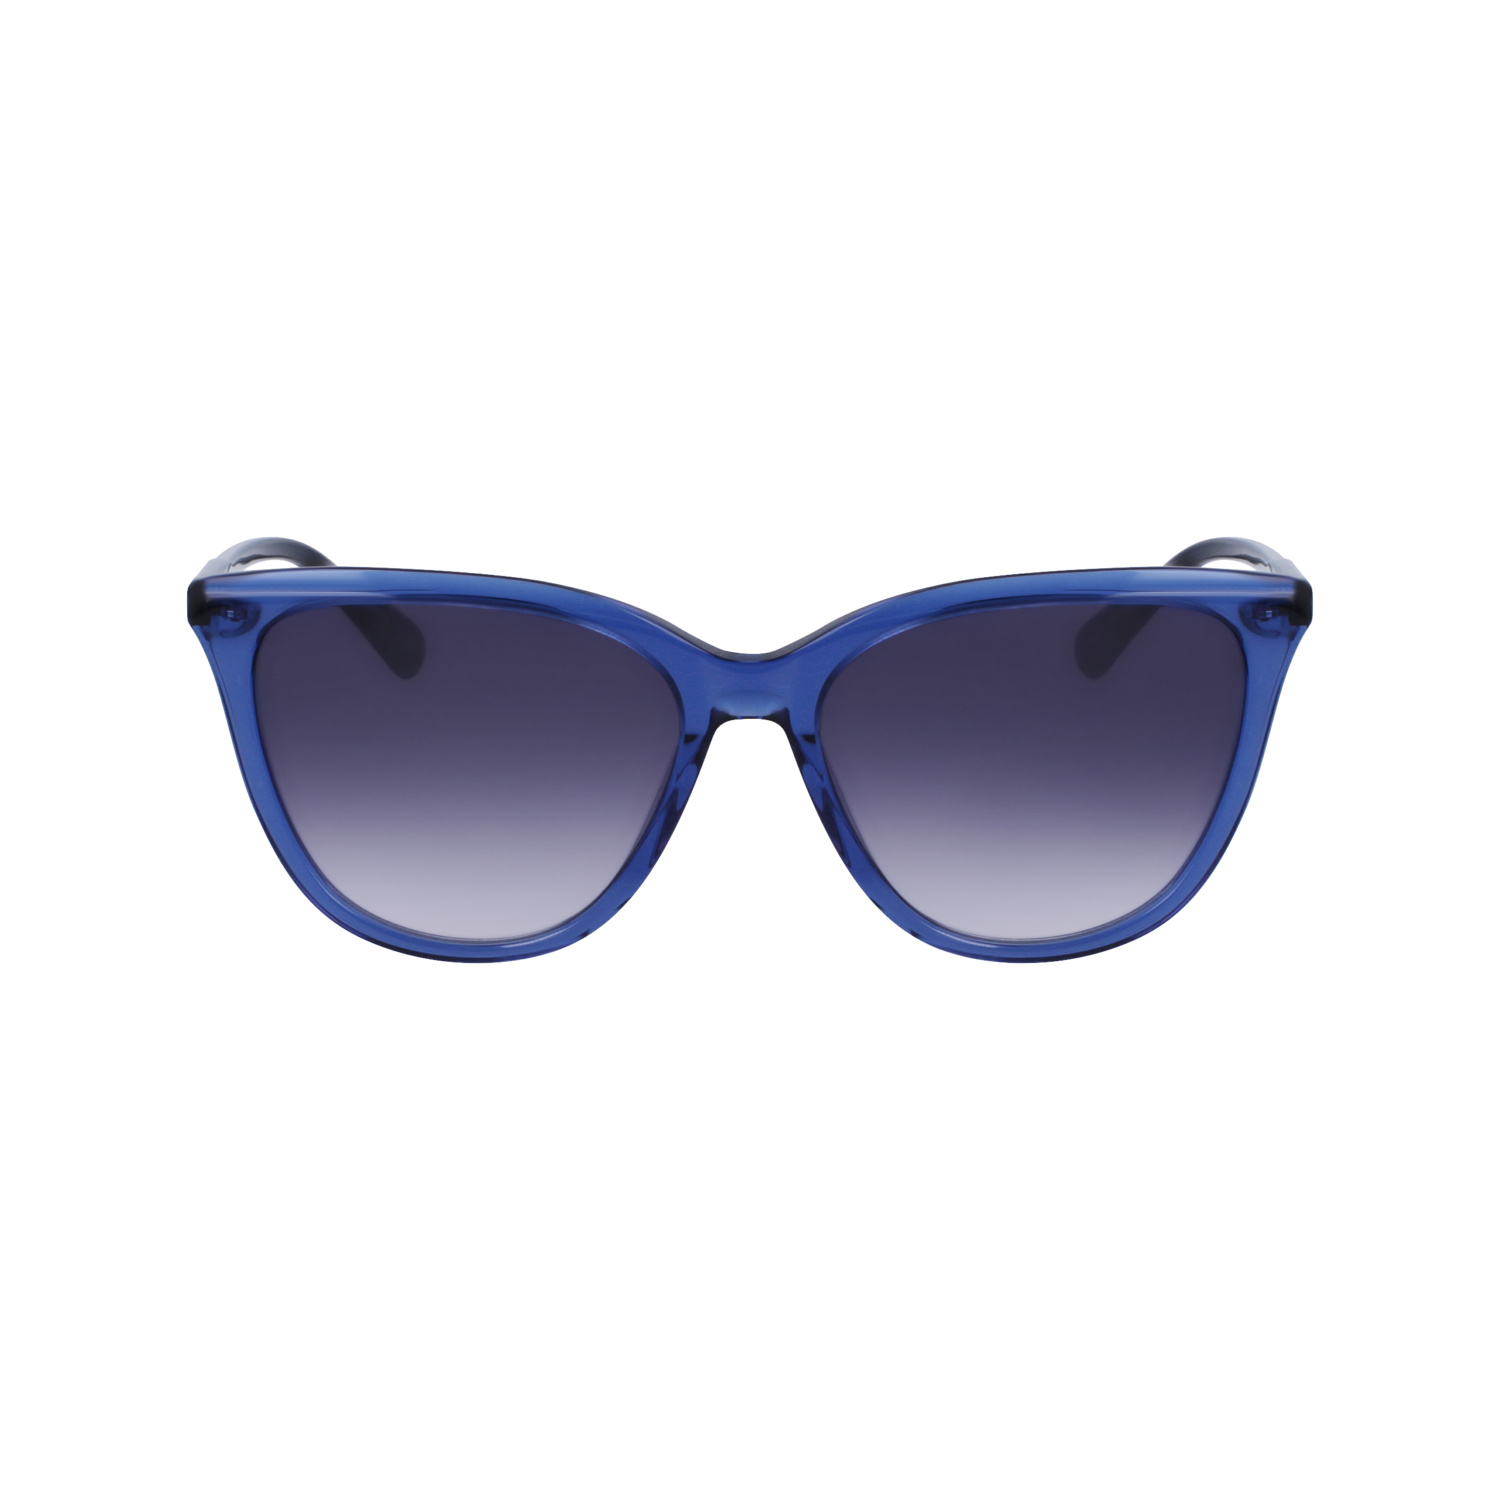 Longchamp Sunglasses In Blue